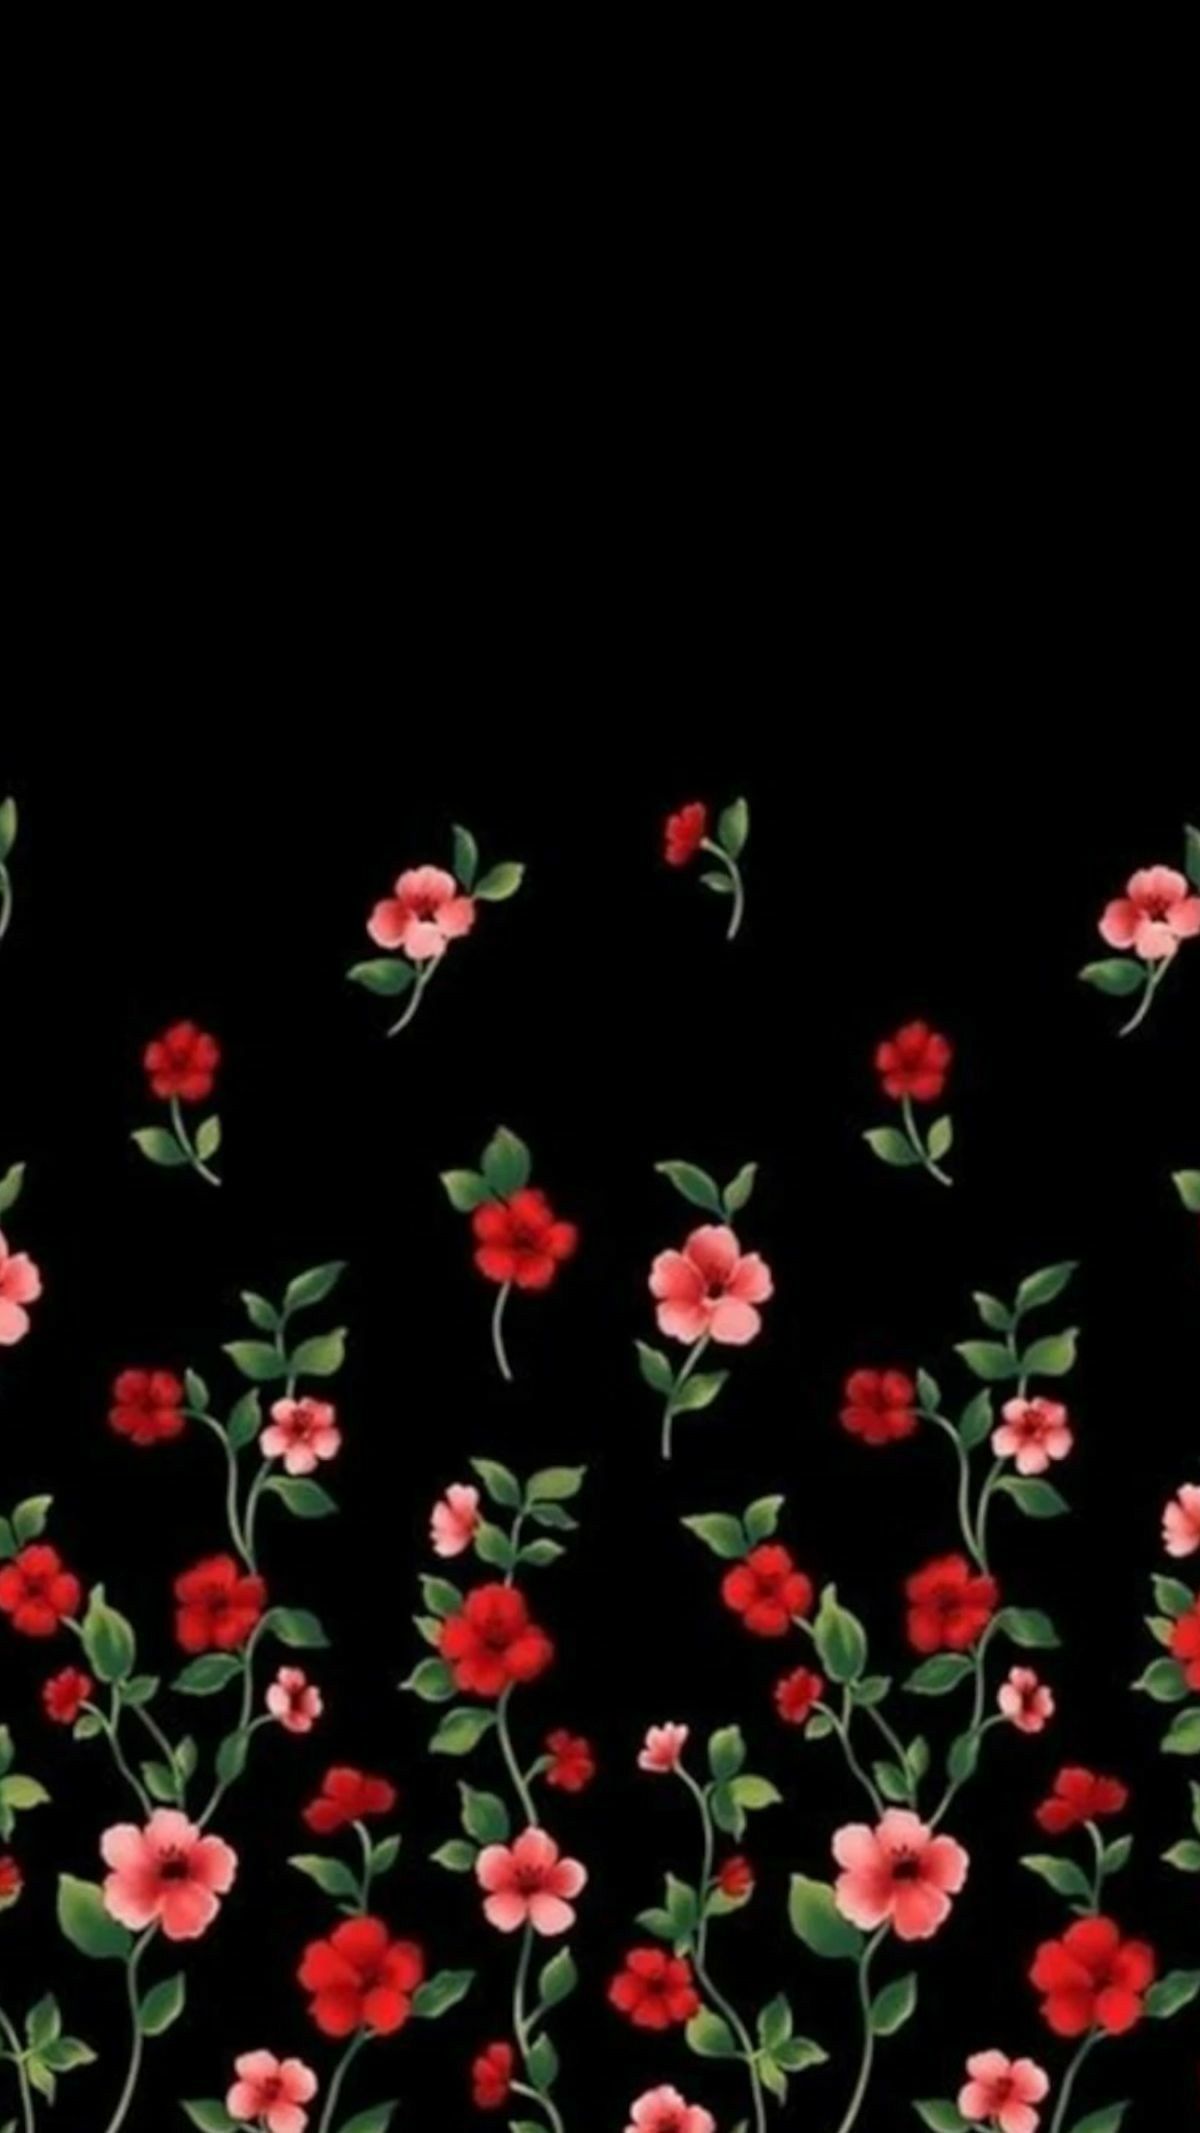 AMOLED) Floral Wallpaper Background Lock Screen. Black Flowers Wallpaper, Flowery Wallpaper, Floral Wallpaper Phone